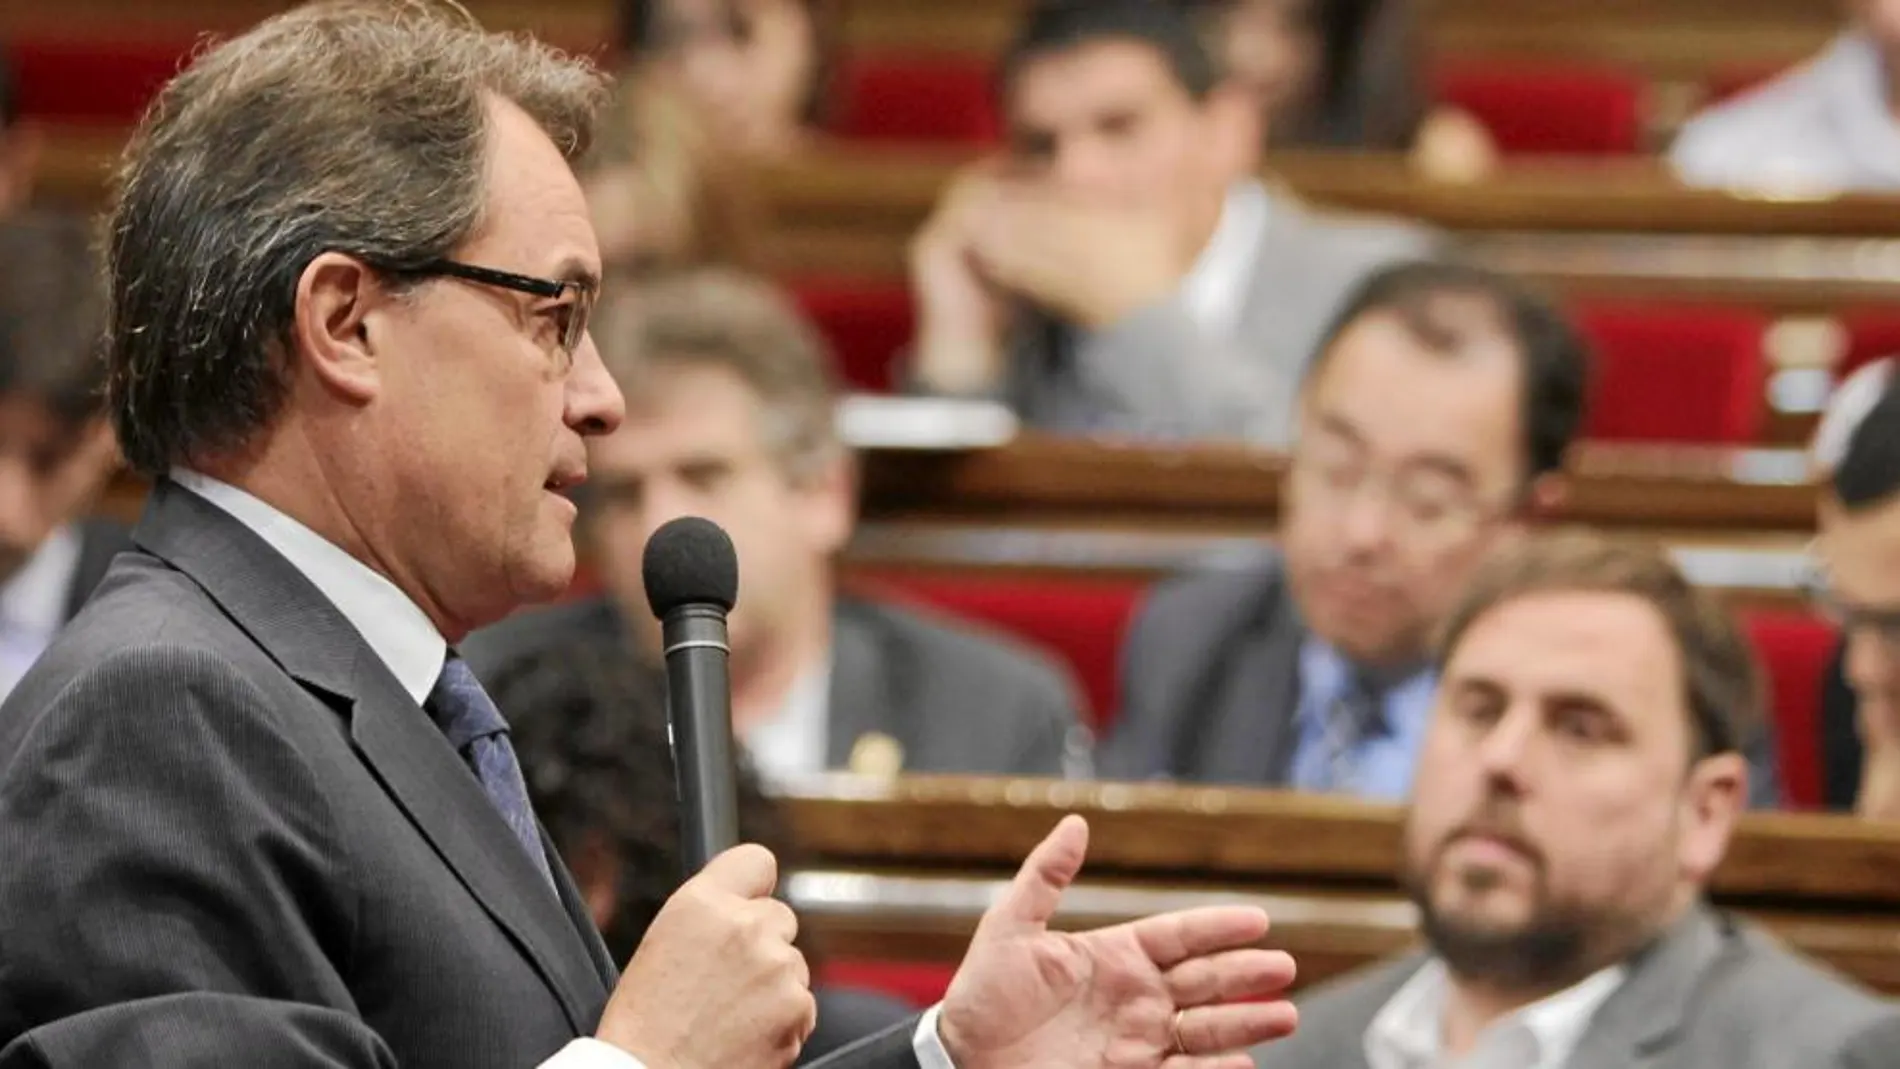 El presidente de la Generalitat, Artur Mas, se dirige a la Cámara catalana